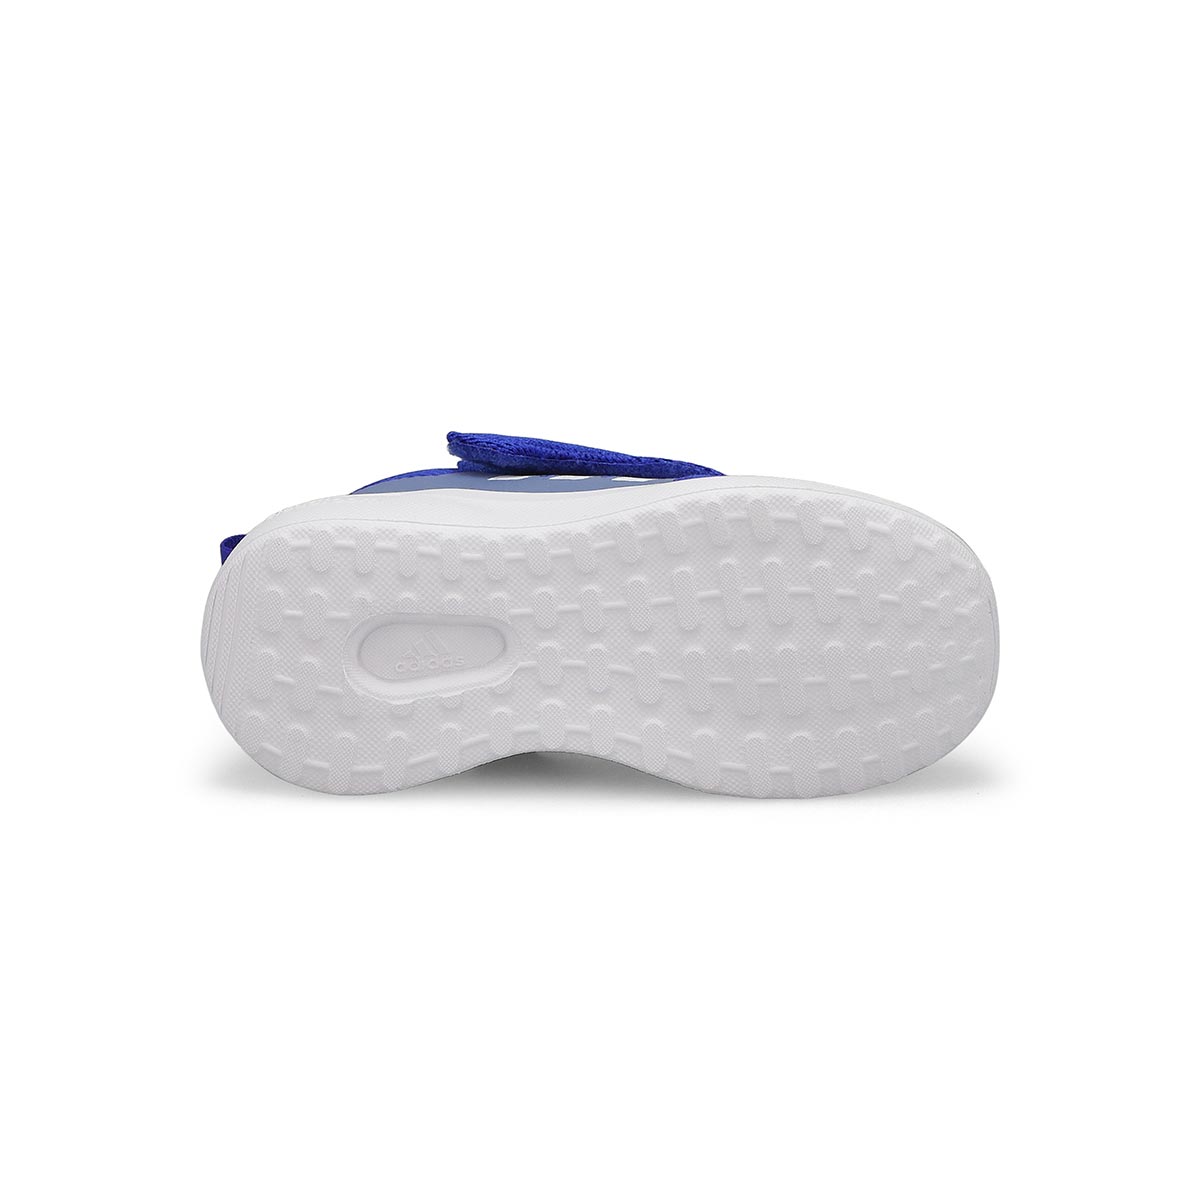 Infants'  FortaRun 2.0 AC I Sneaker - Blue/White